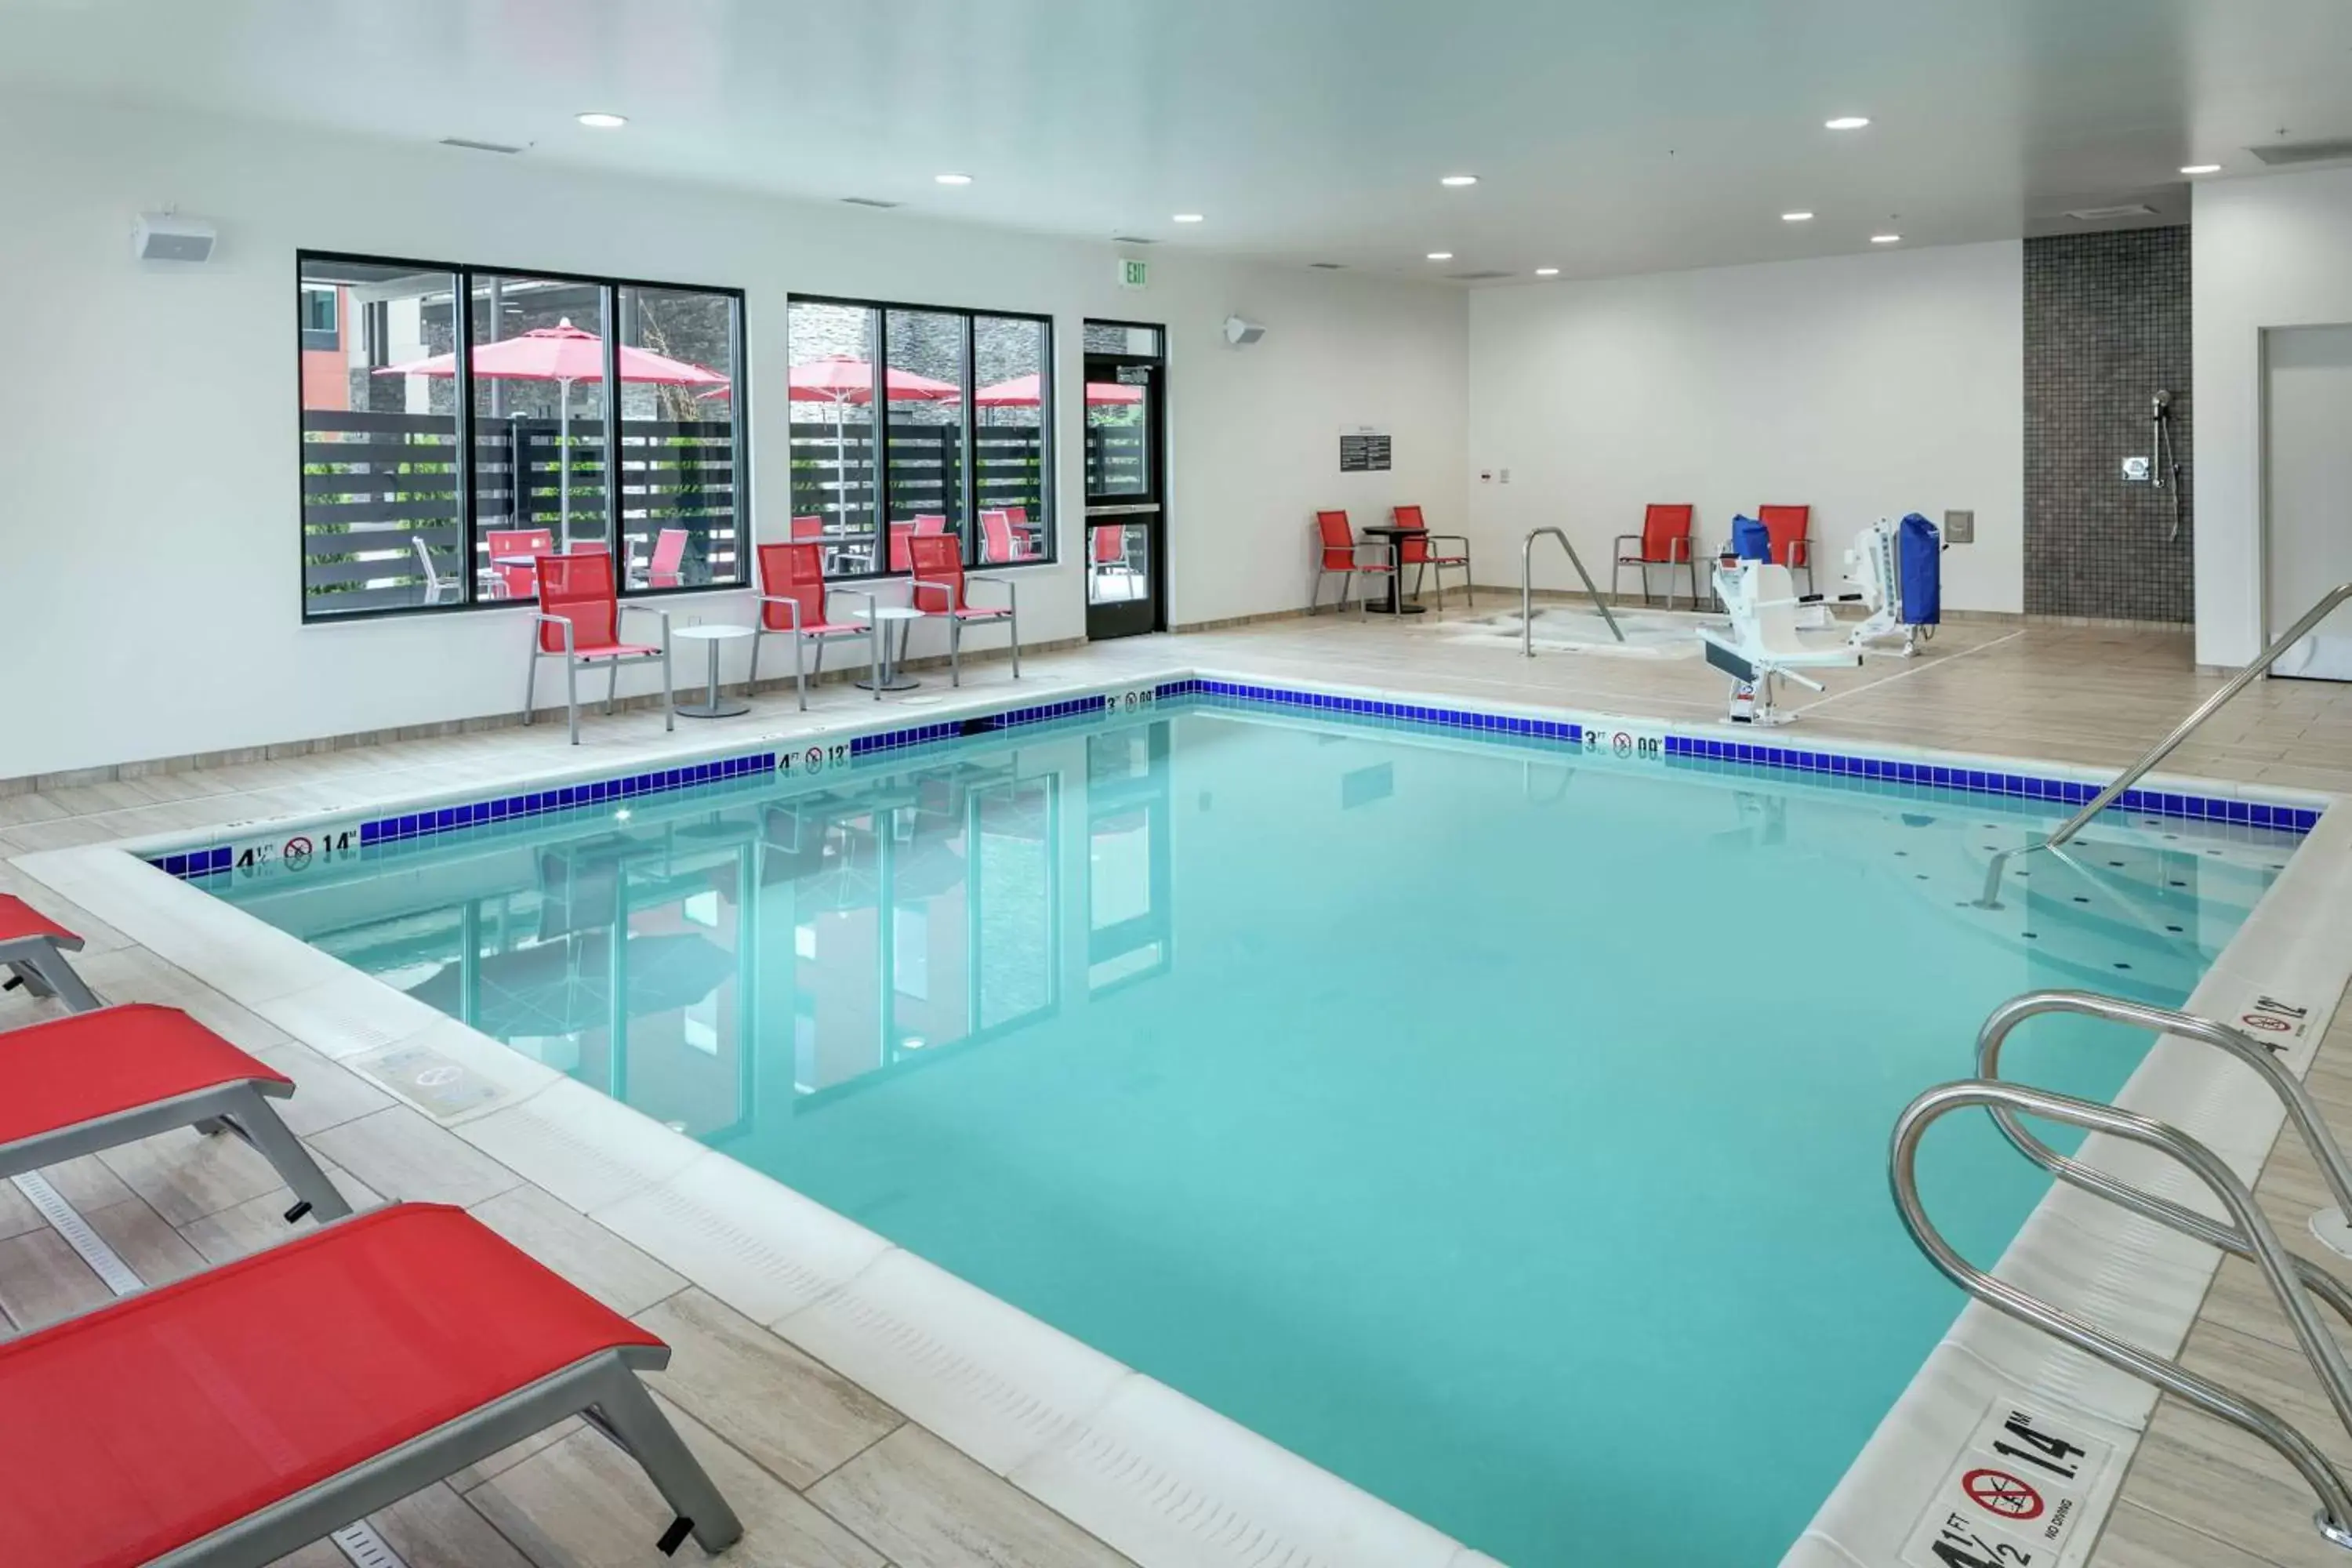 Pool view, Swimming Pool in Hilton Garden Inn Wenatchee, Wa